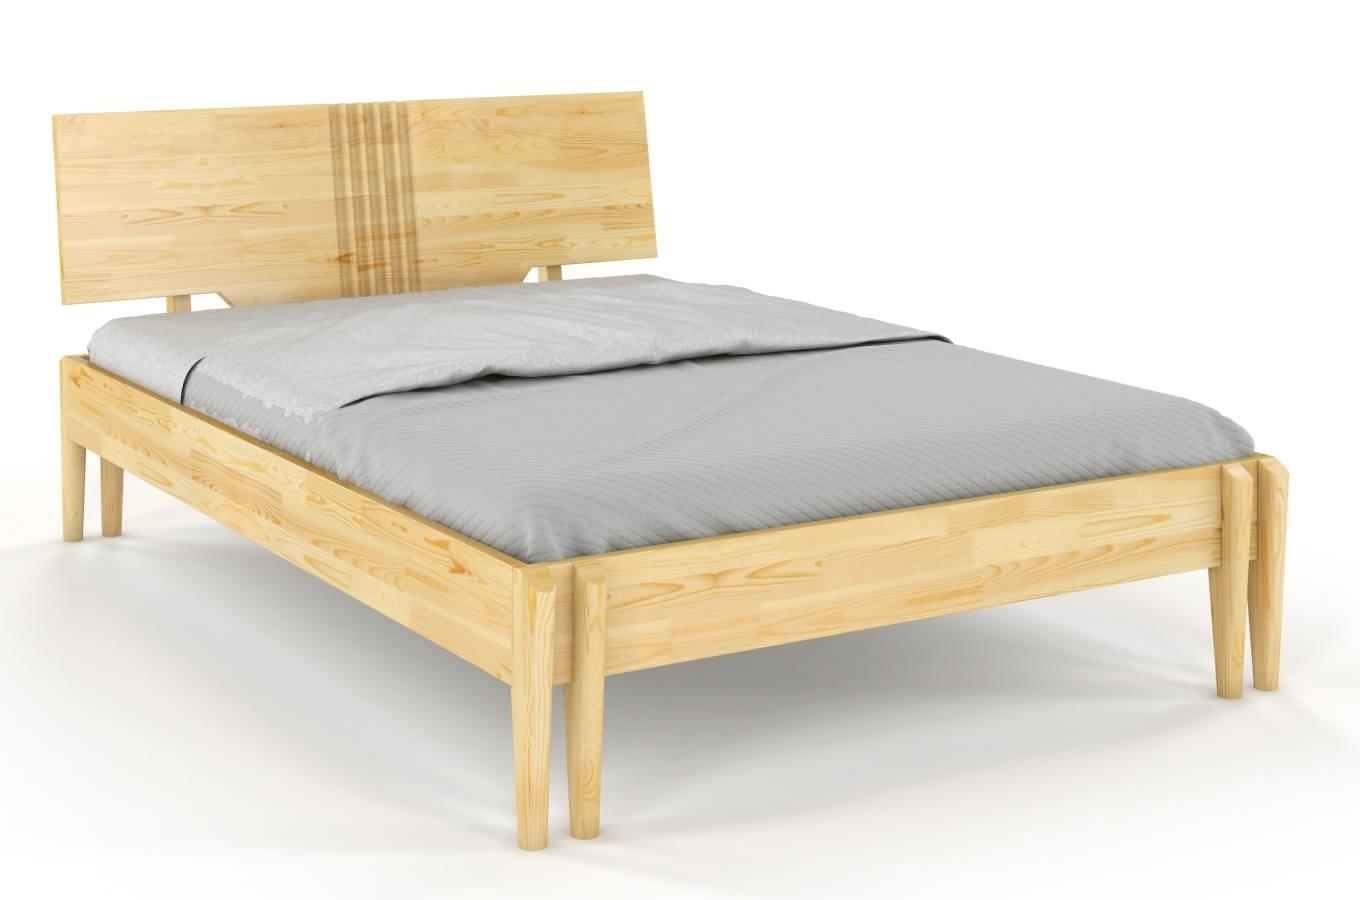 Łóżko drewniane sosnowe Visby POZNAŃ /180x200 cm, kolor naturalny